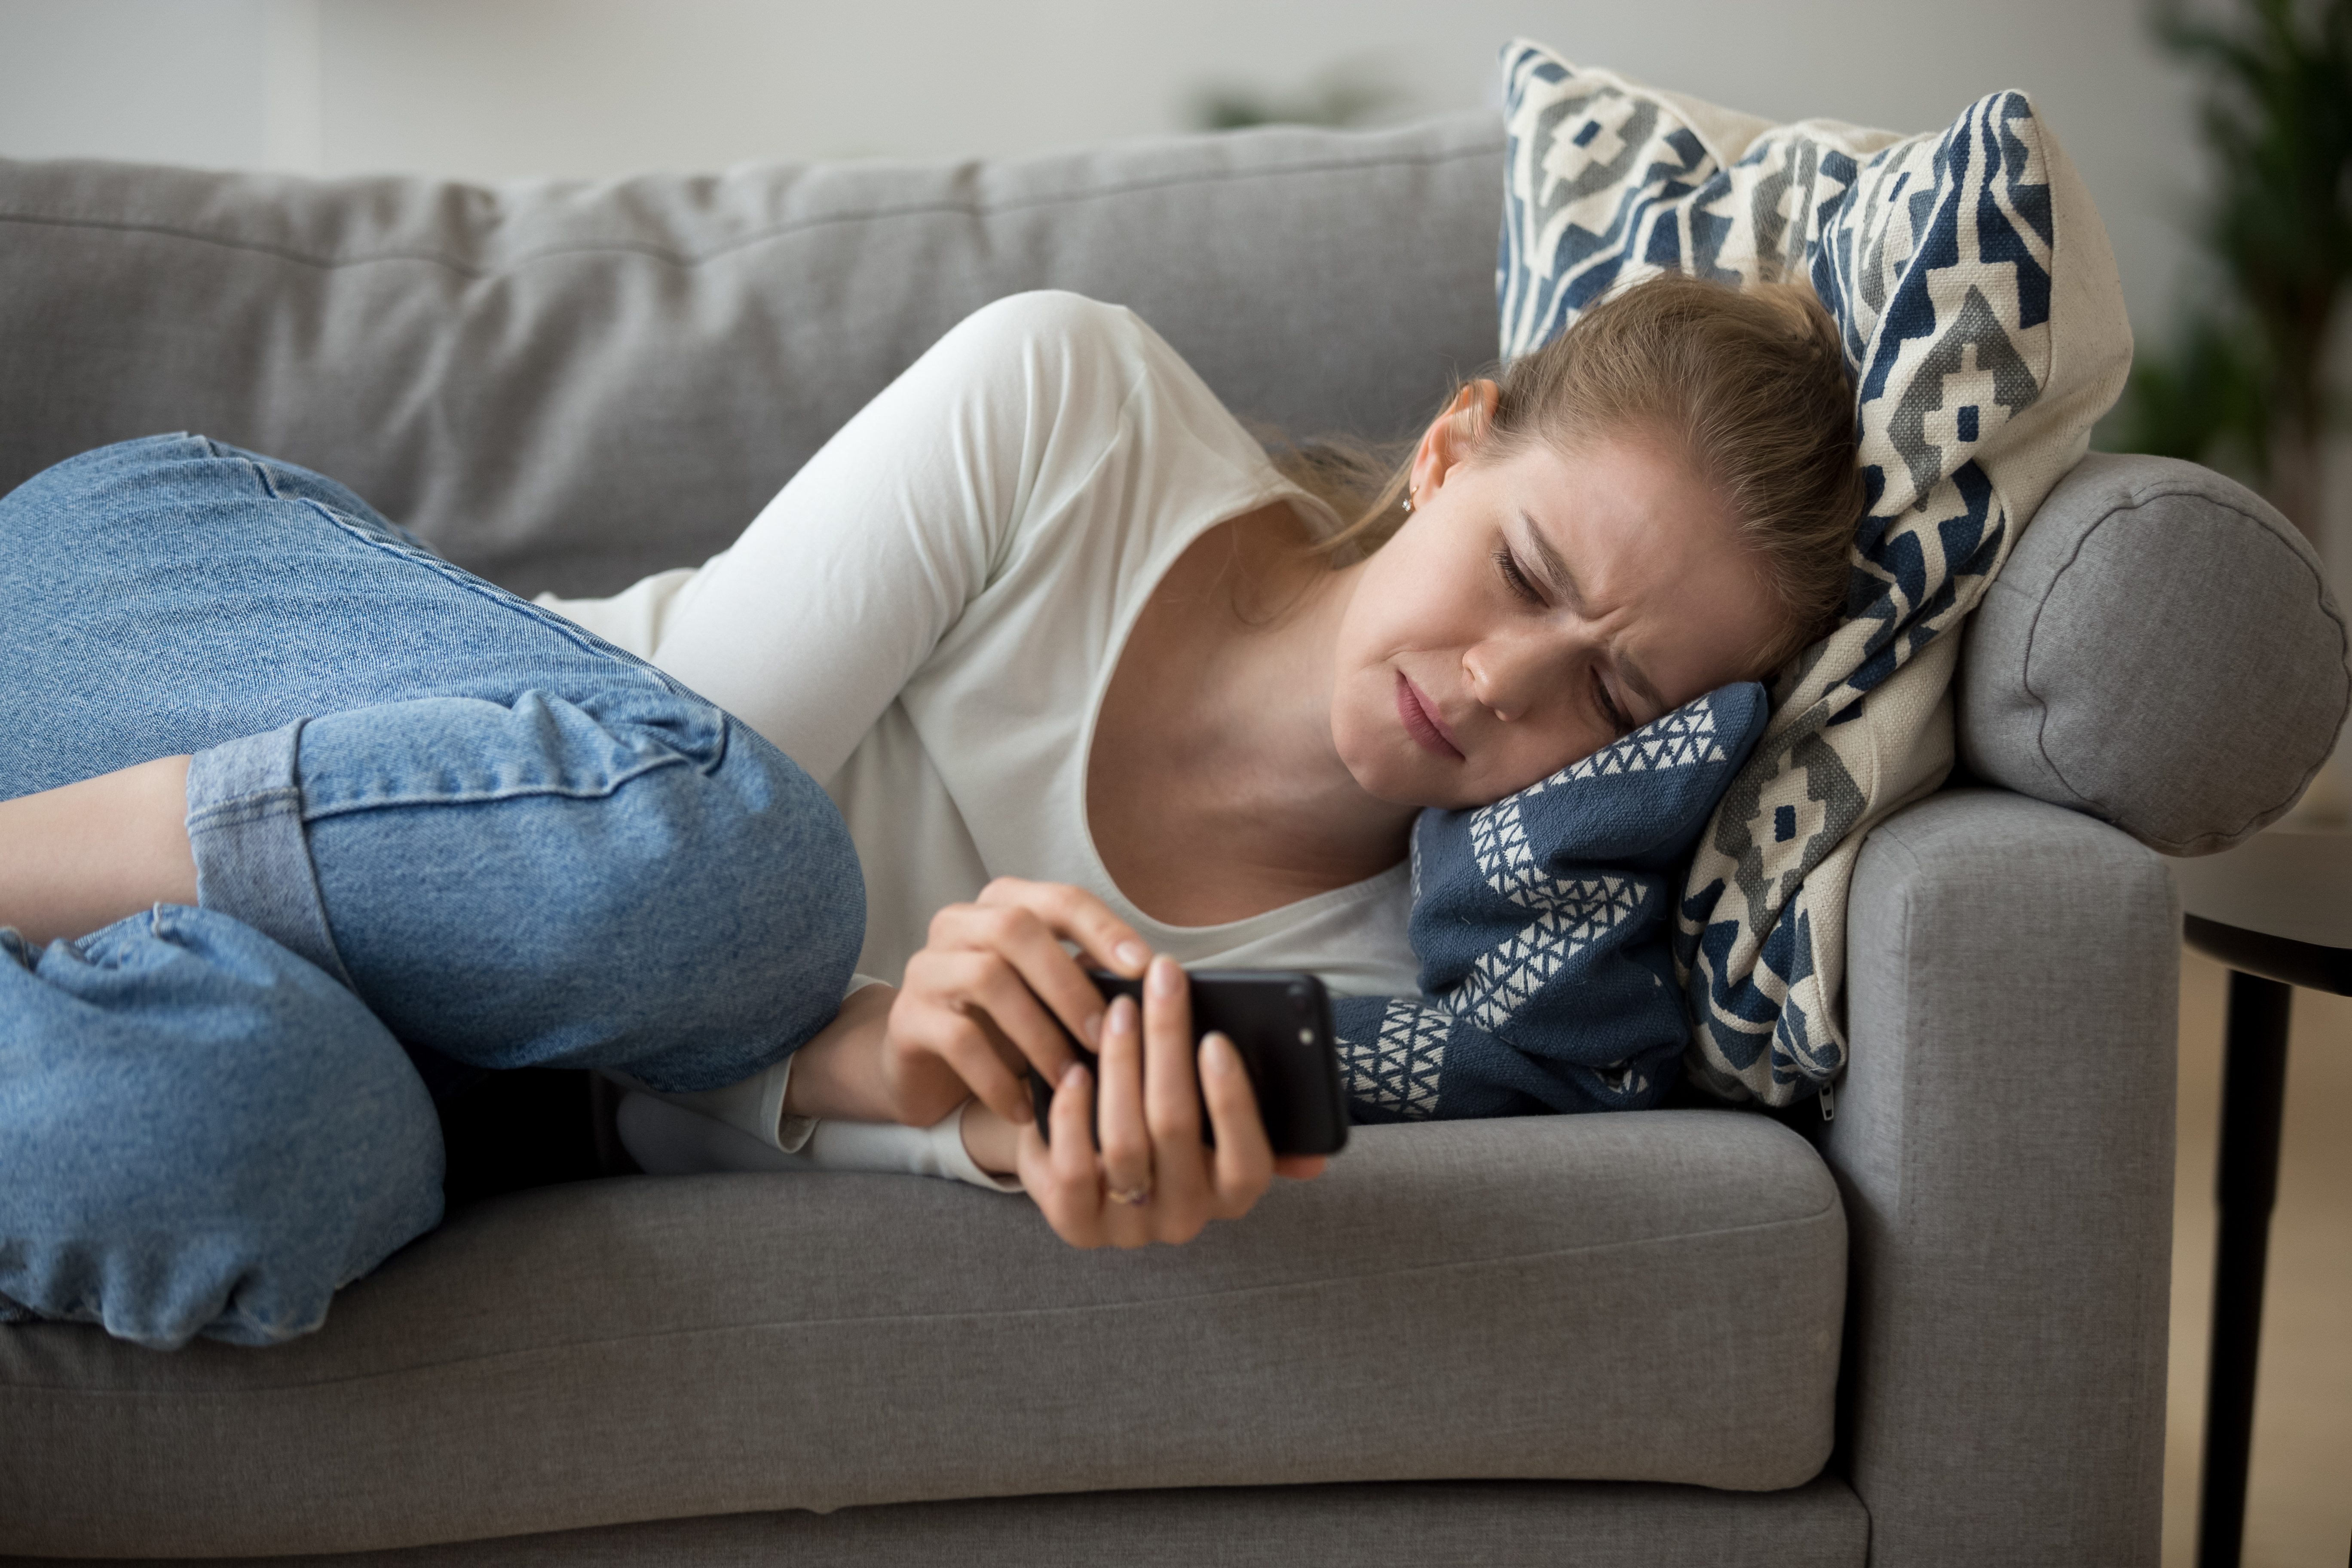 An upset woman lying on her sofa | Source: Shutterstock